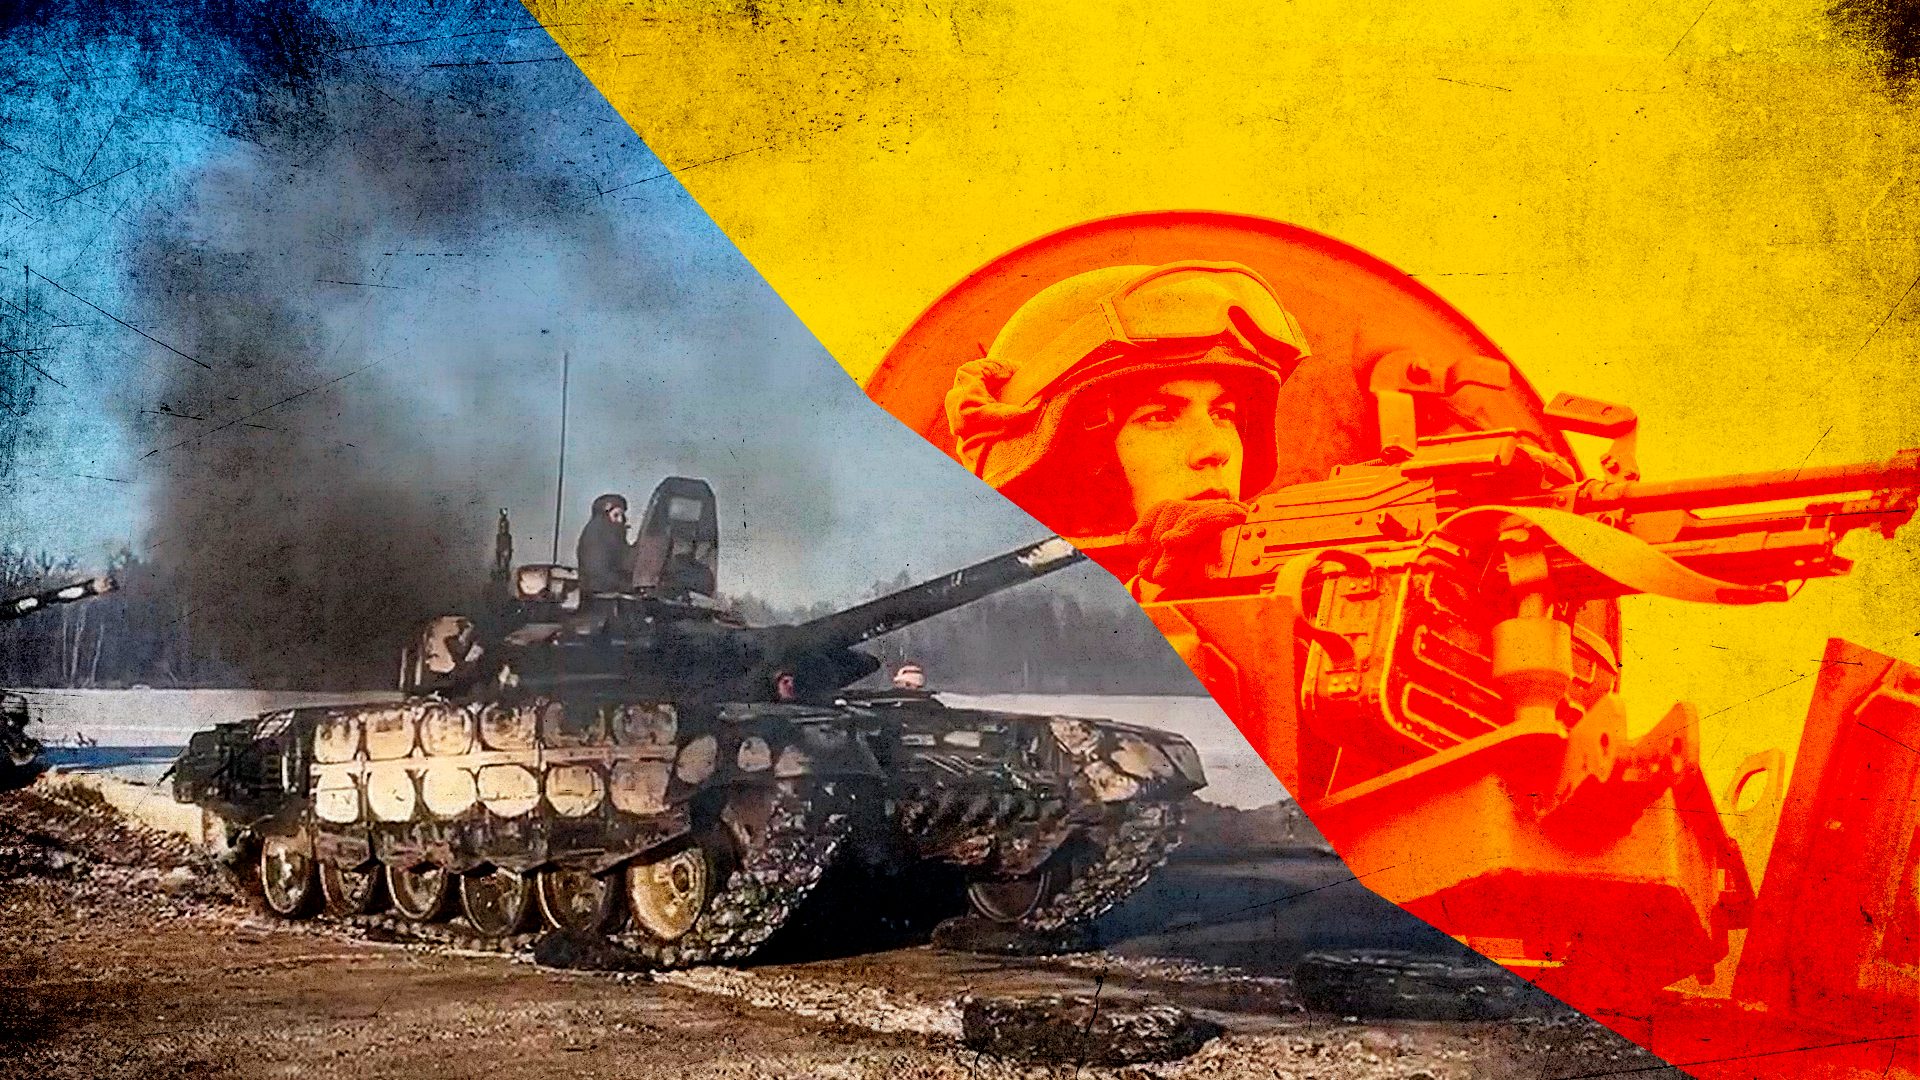 Crisi Ucraina: comunicato Anppia